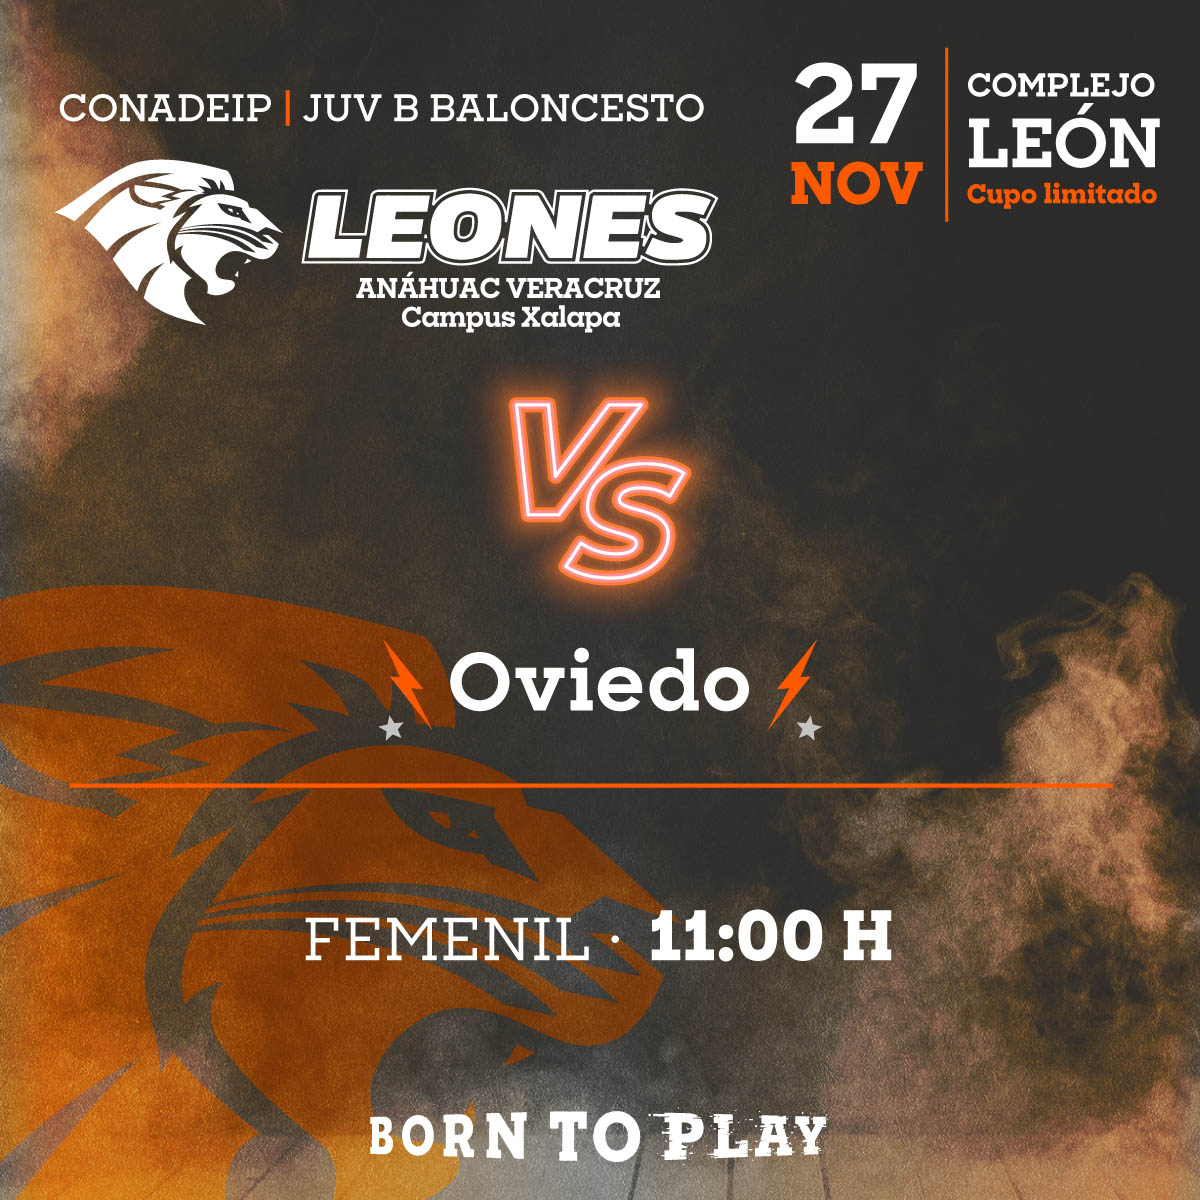 Baloncesto Femenil: Leonas vs Oviedo